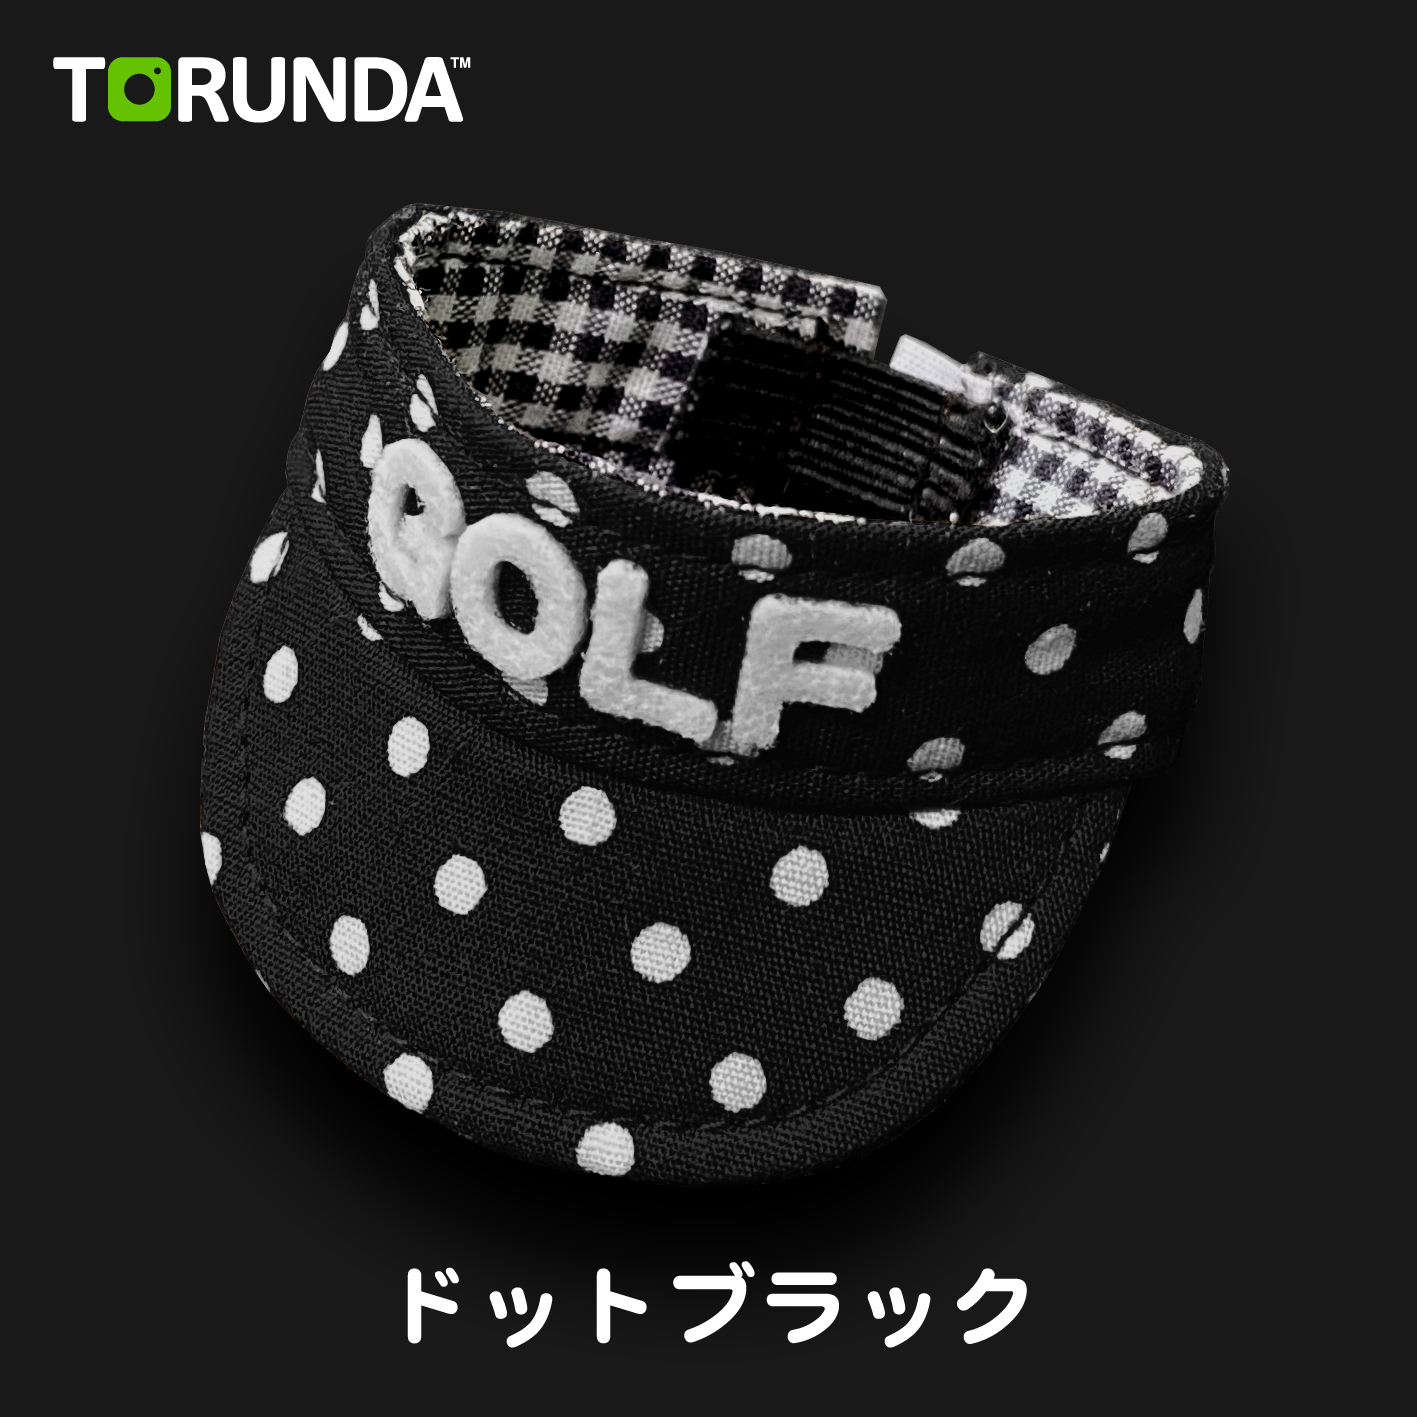 TORUNDA 撮るんだ かわいい 可愛い ゴルフボール用 サンバイザー ドット柄 ブラック